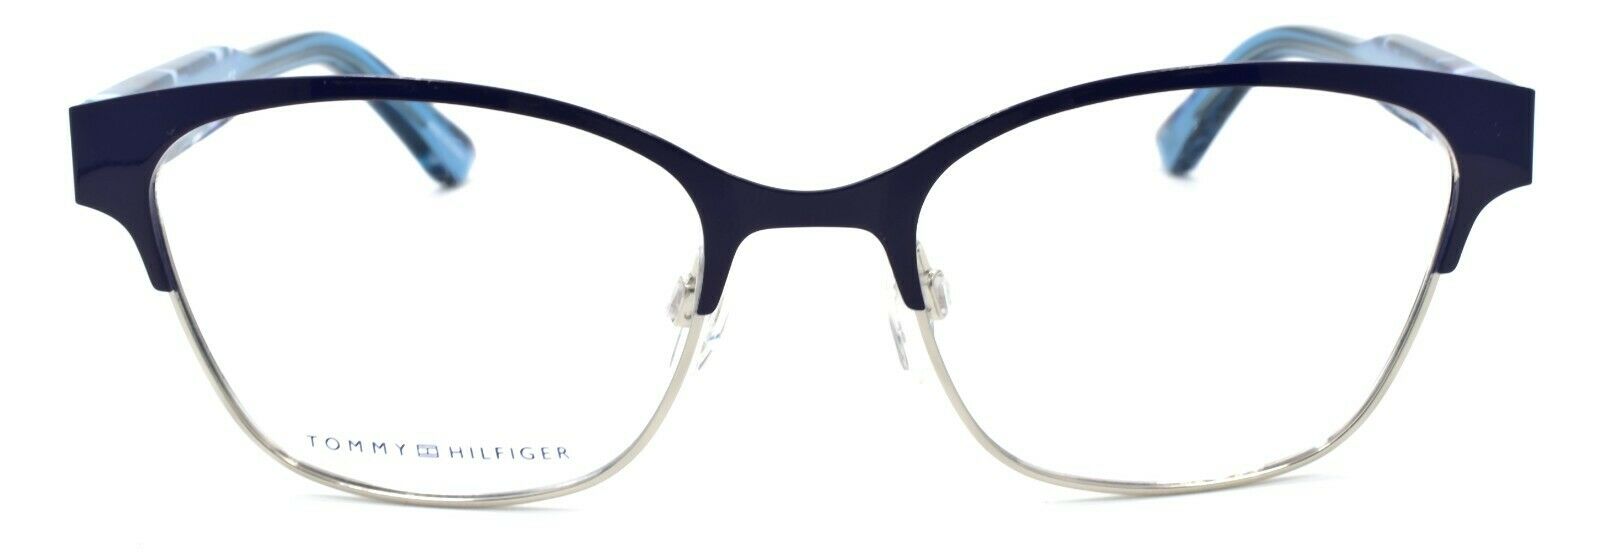 2-TOMMY HILFIGER TH 1388 QQU Women's Eyeglasses Frames 52-18-140 Blue-762753978004-IKSpecs